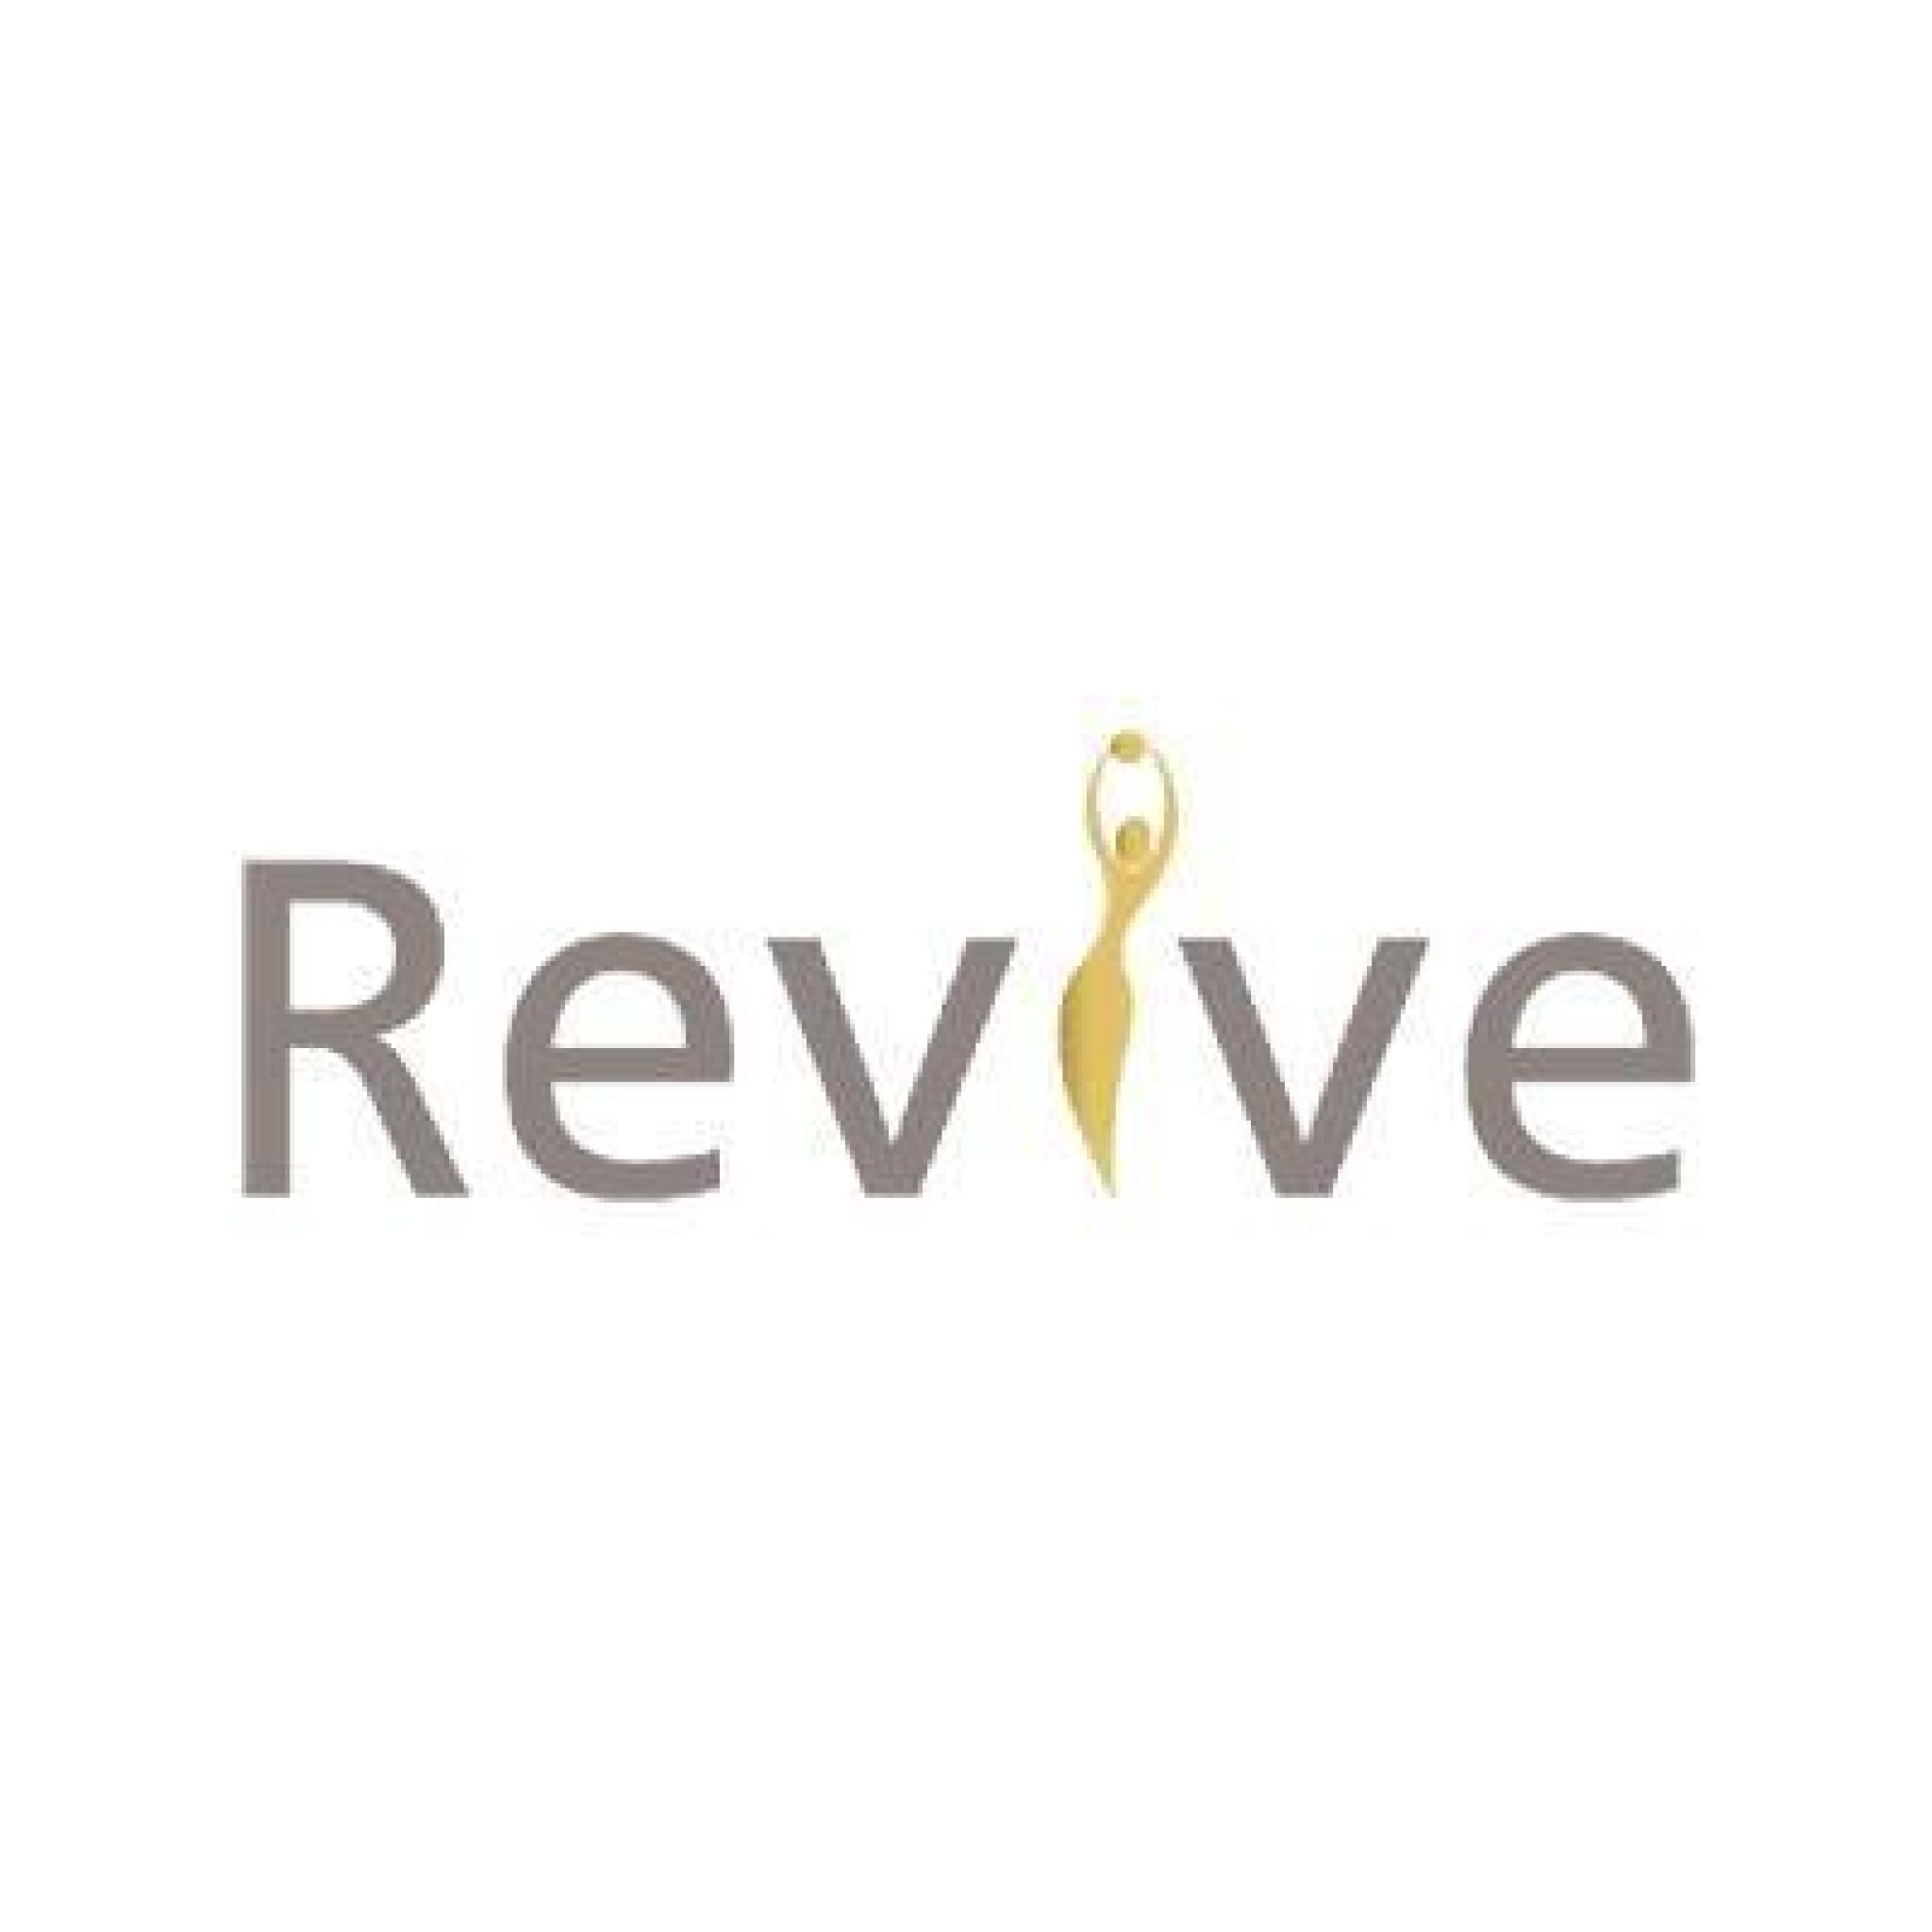 Revive Spa - Home Service